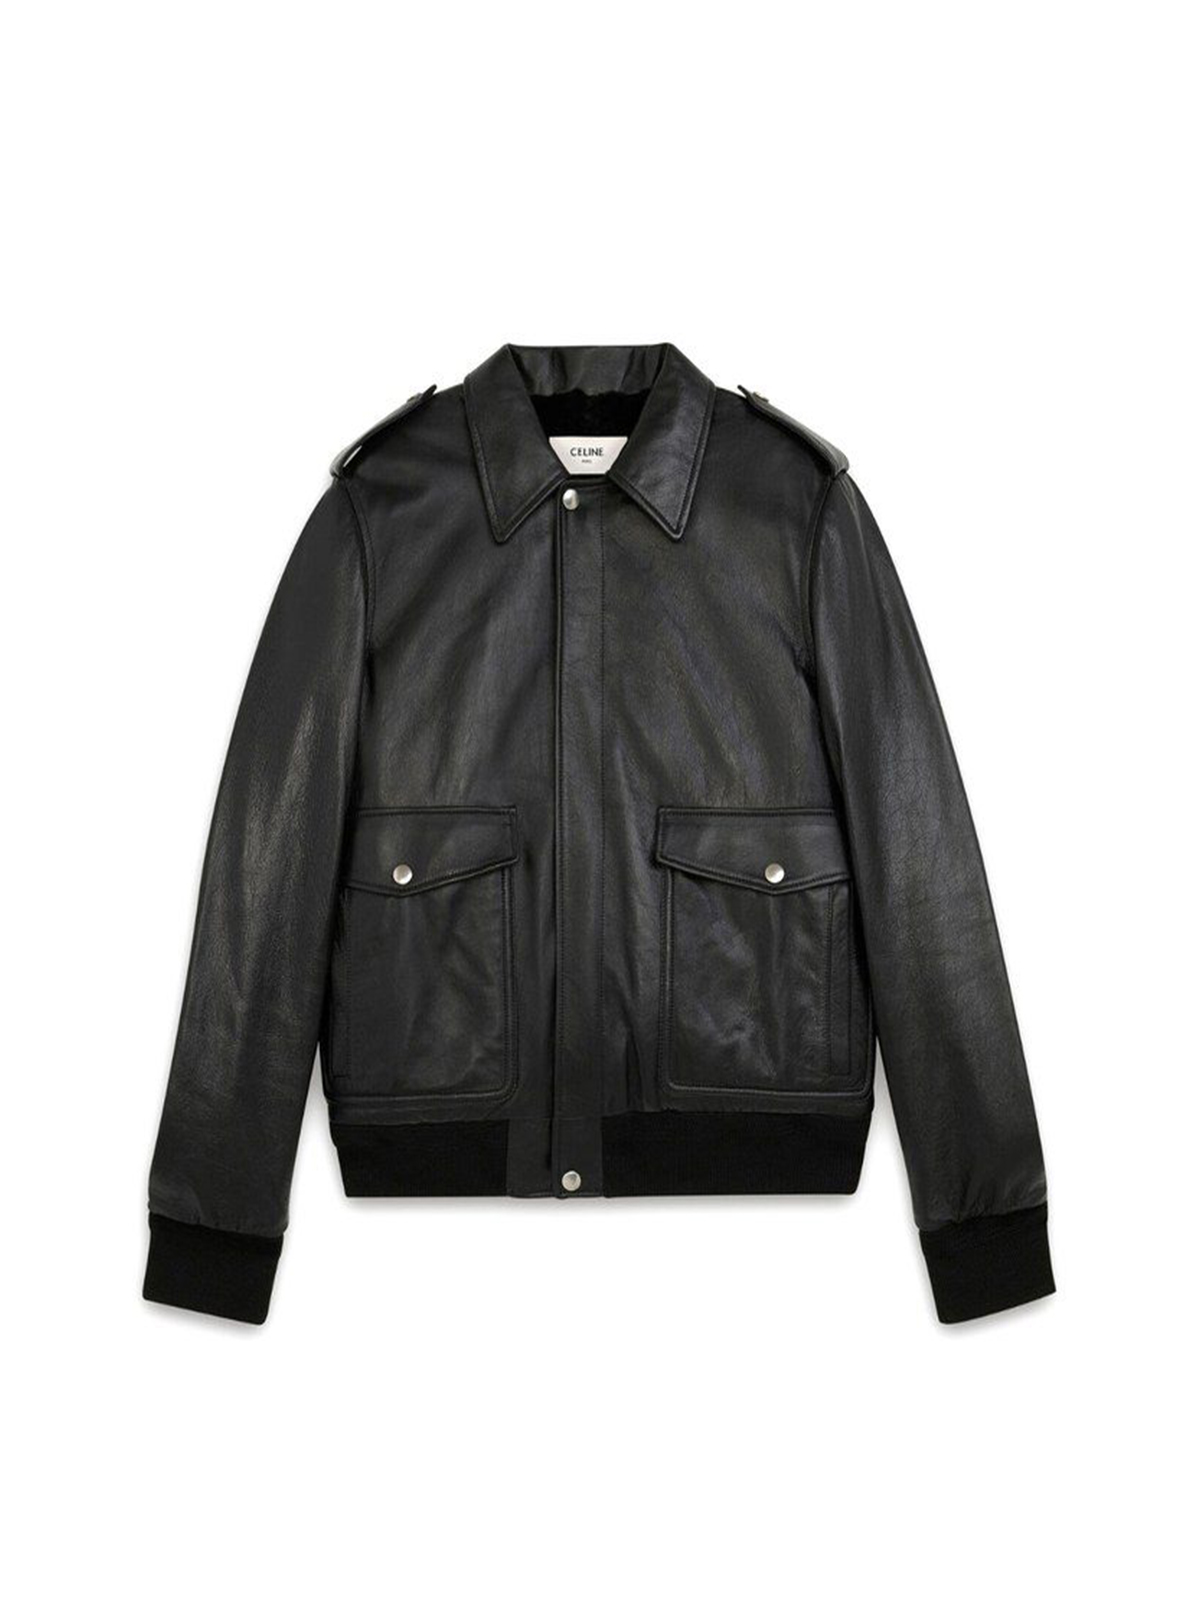 Hedi Slimane Celine Aviator Black Leather Jacket